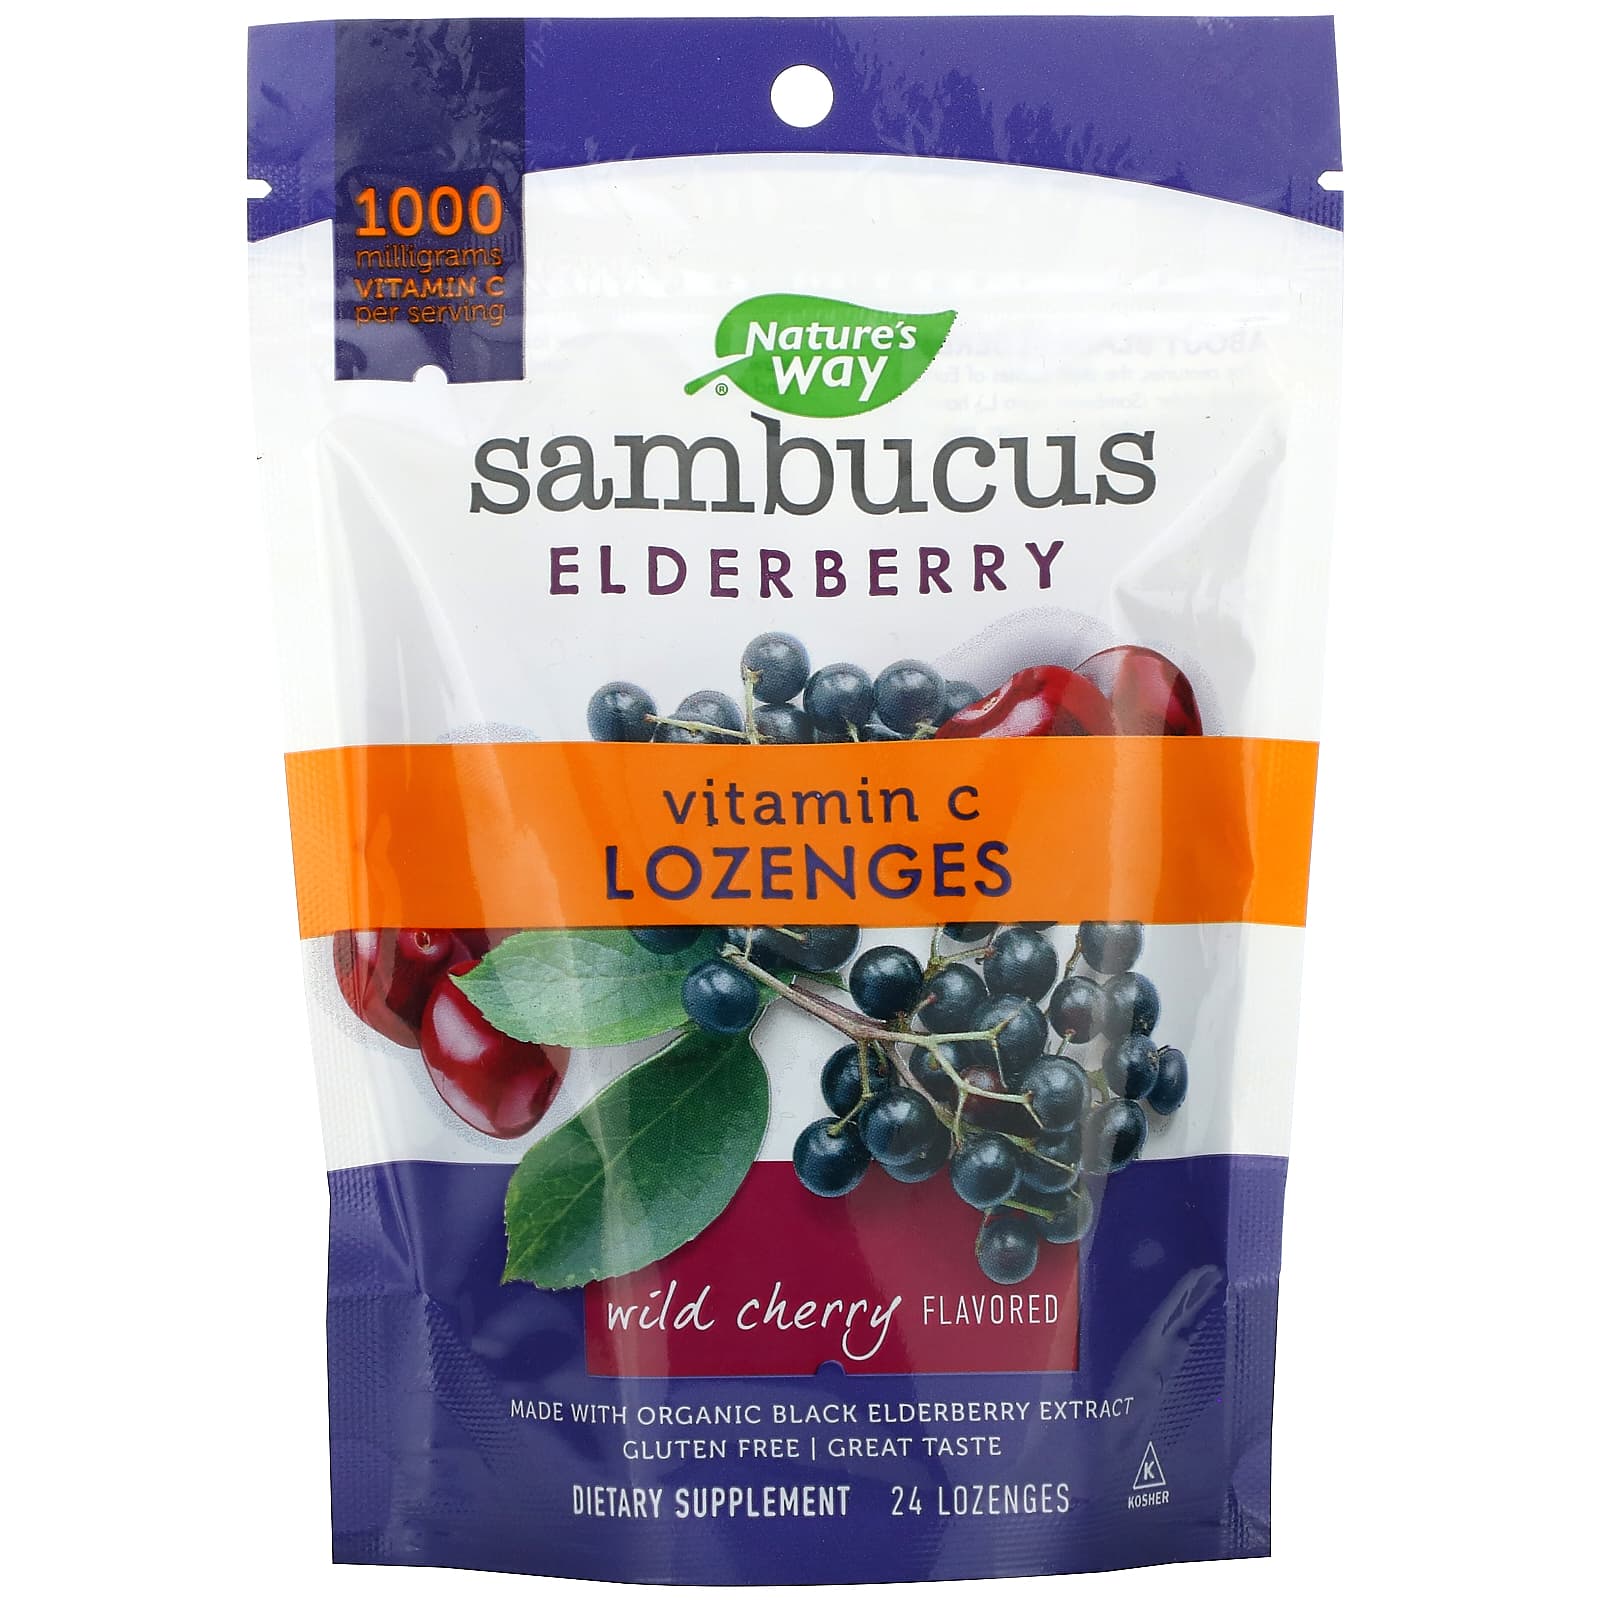 sambucus lozenge, elderberry lozenge, sambucus cherry lozenge, elderberry cherry lozenge, immune lozenge, immune flavored lozenge, vitamin c lozenge, sambucus elderberry lozenge